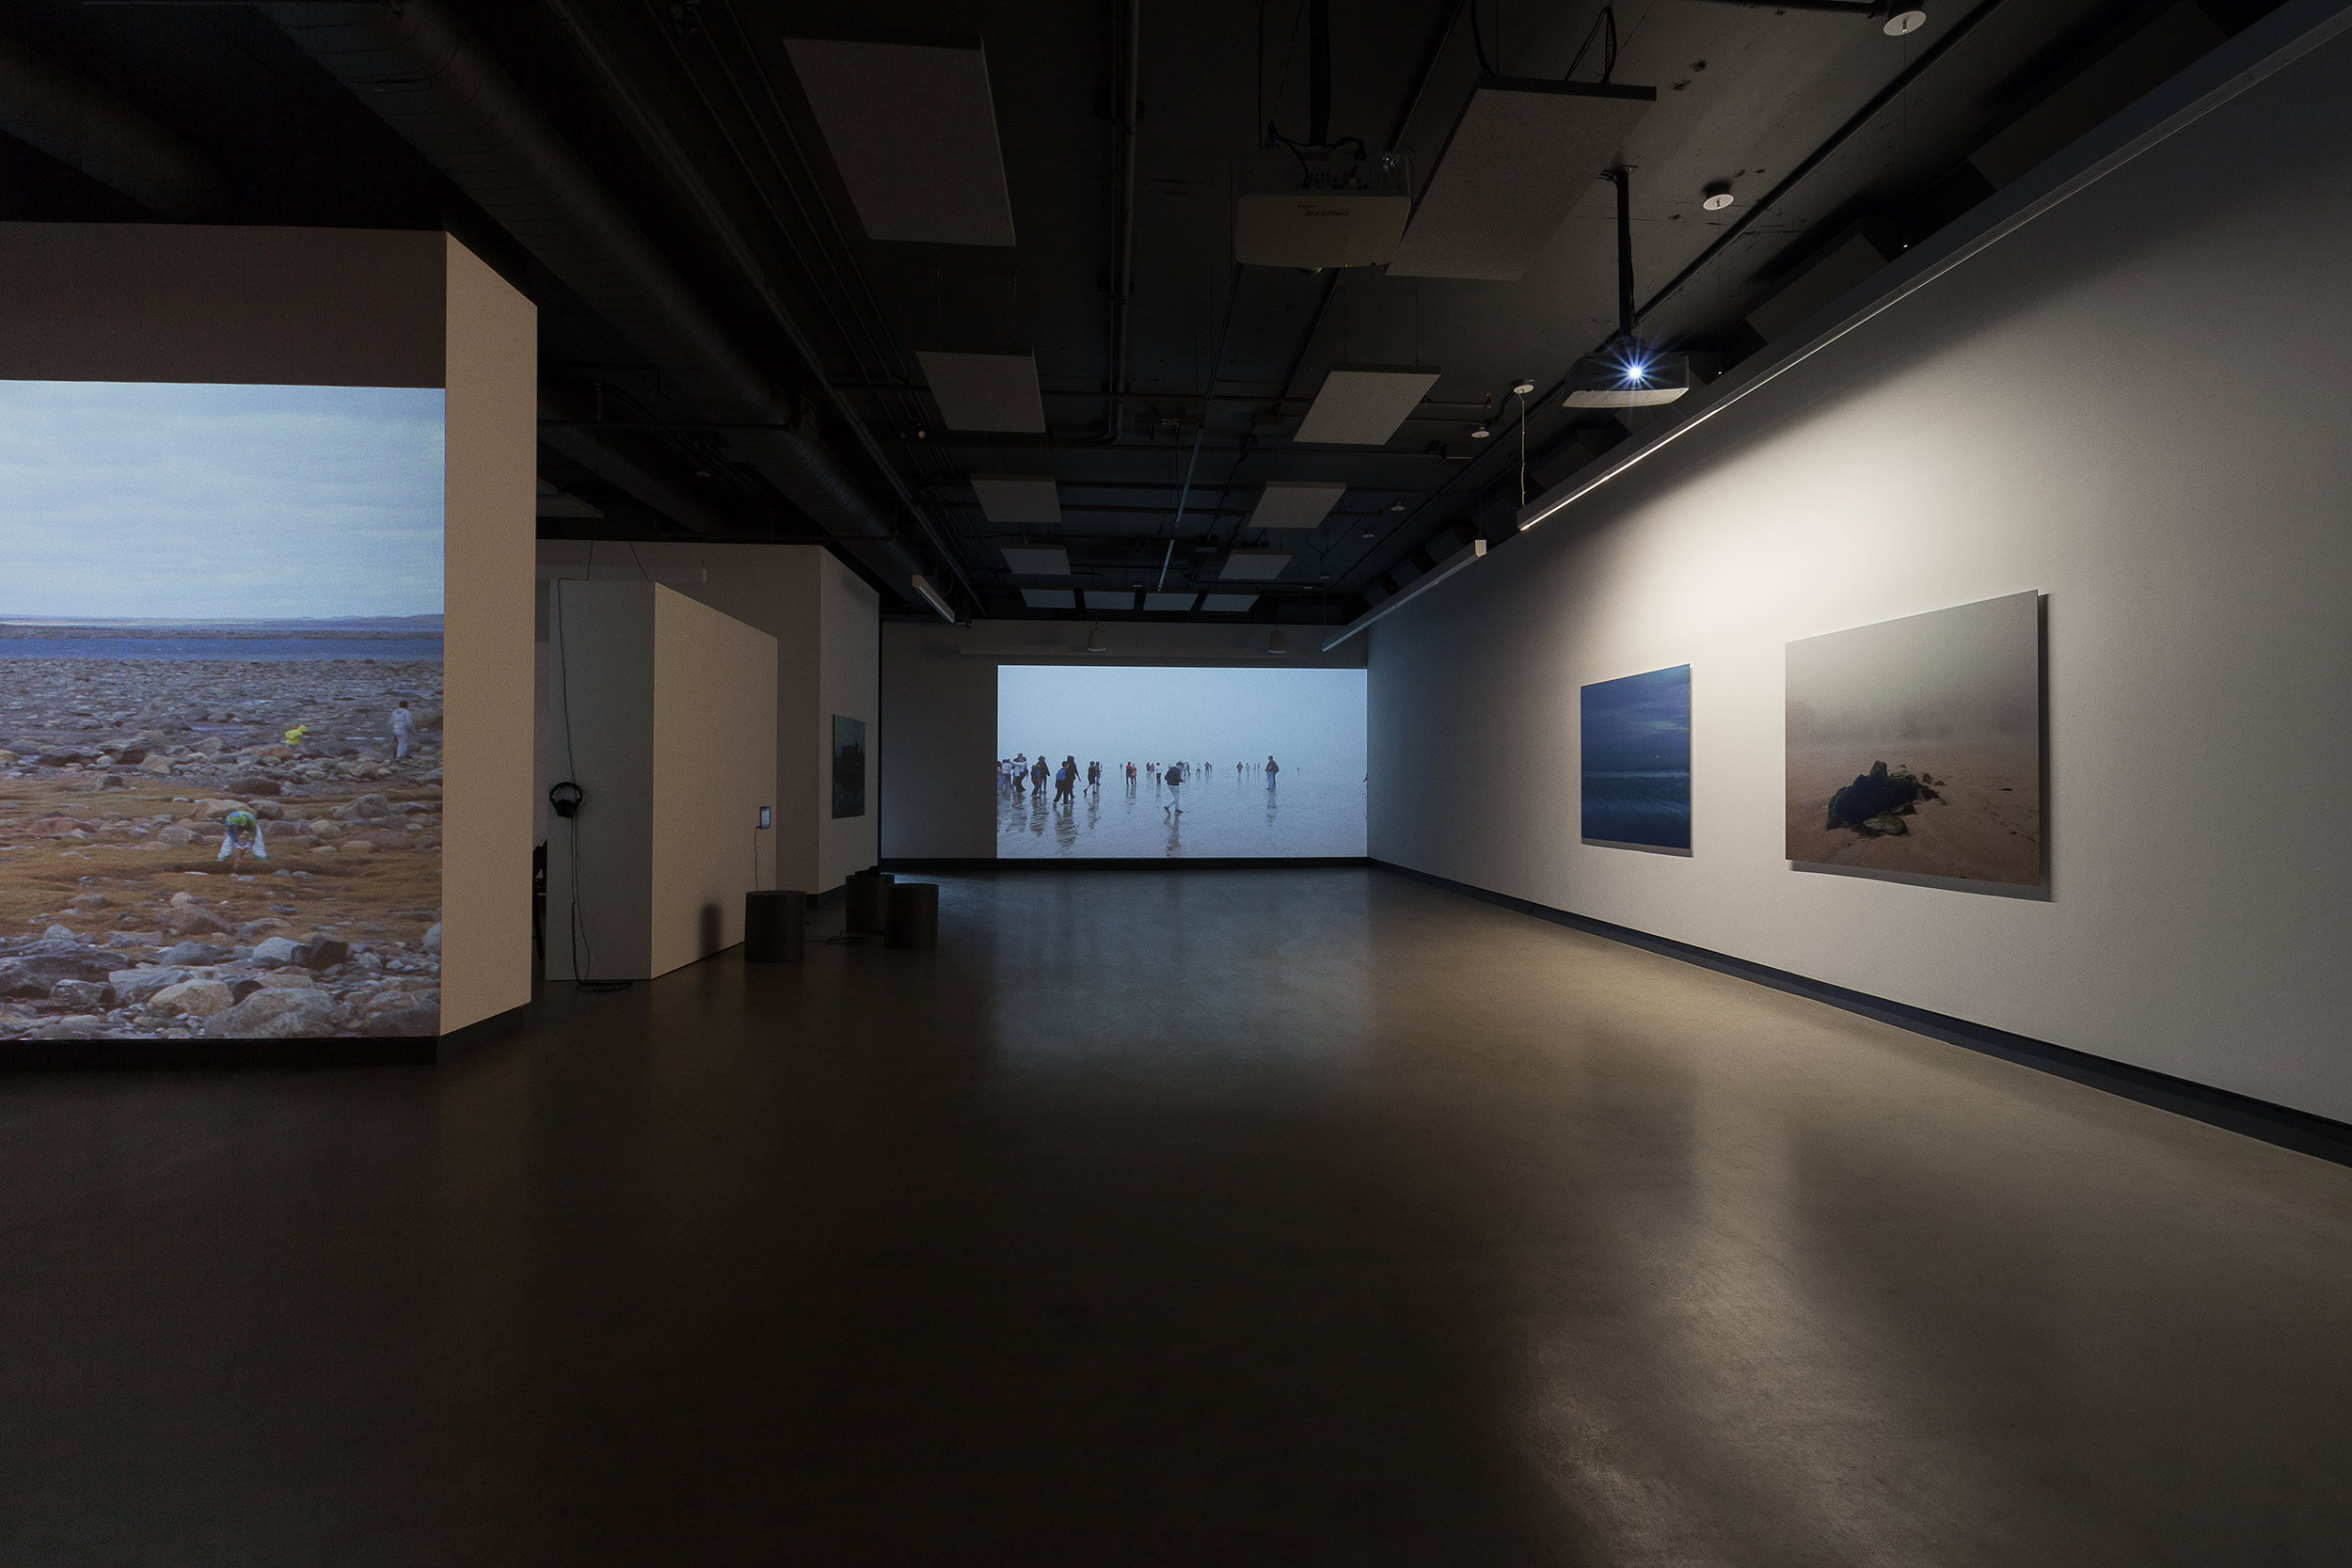  © Thomas Kneubühler, installation view of the exhibition  Landing Sites , Dazibao, 2018. Photo: Marilou Crispin. 